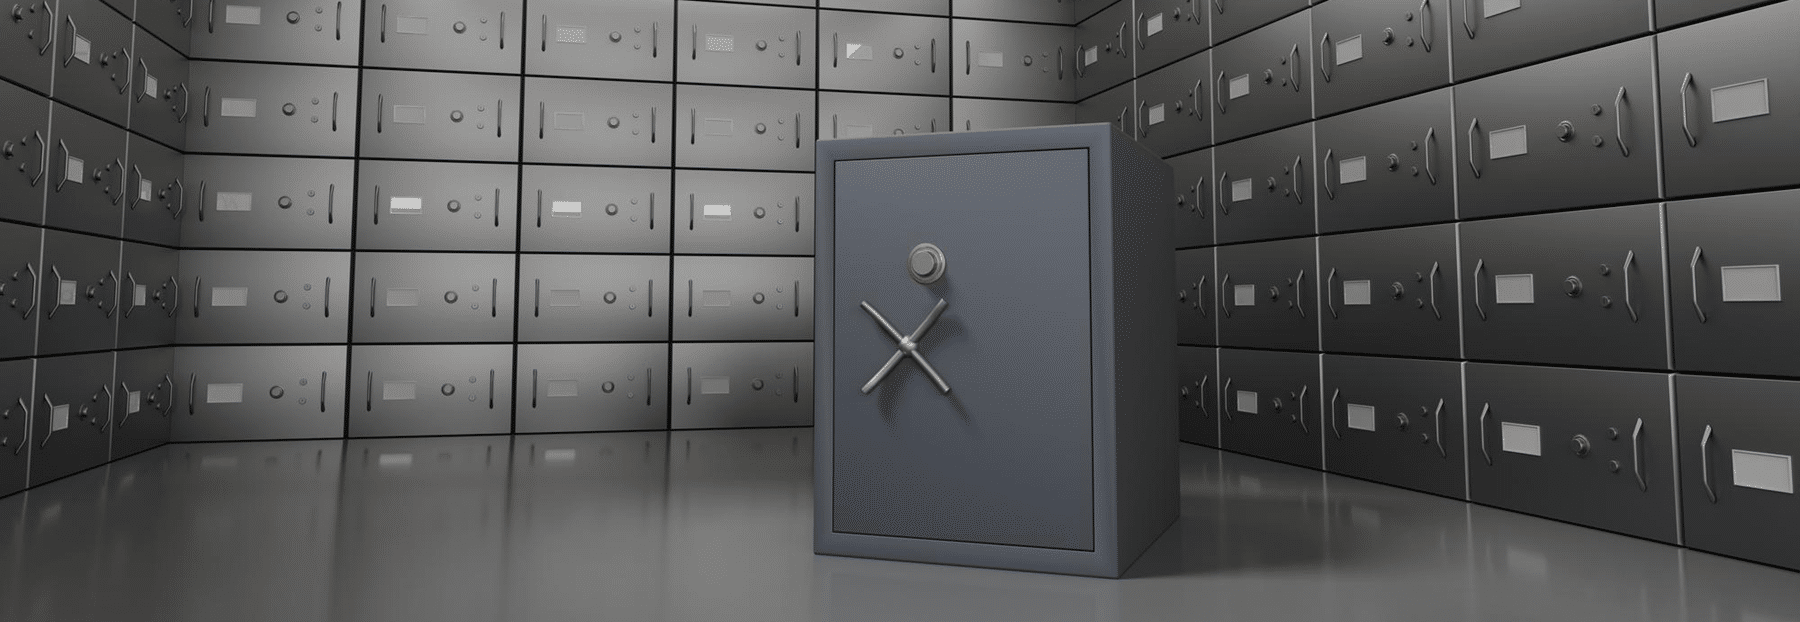 Secure Vault Tokenization